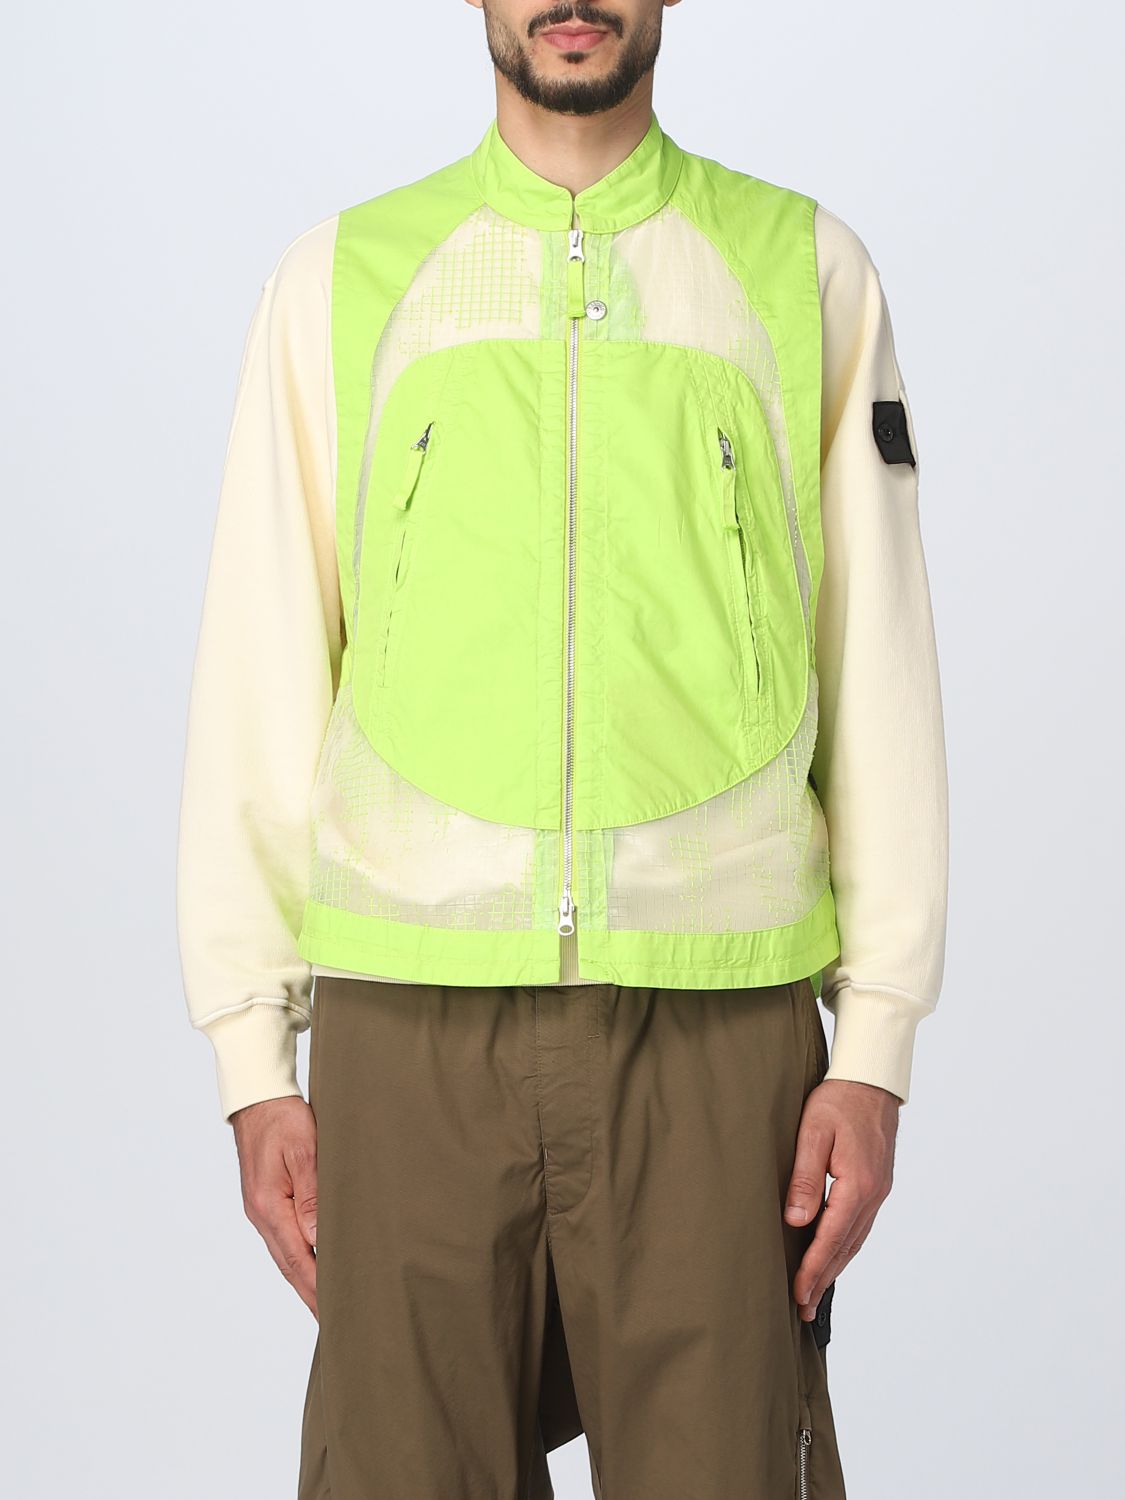 Koor hoek Vlucht STONE ISLAND SHADOW PROJECT: jacket for man - Green | Stone Island Shadow  Project jacket 7819G0223 online on GIGLIO.COM